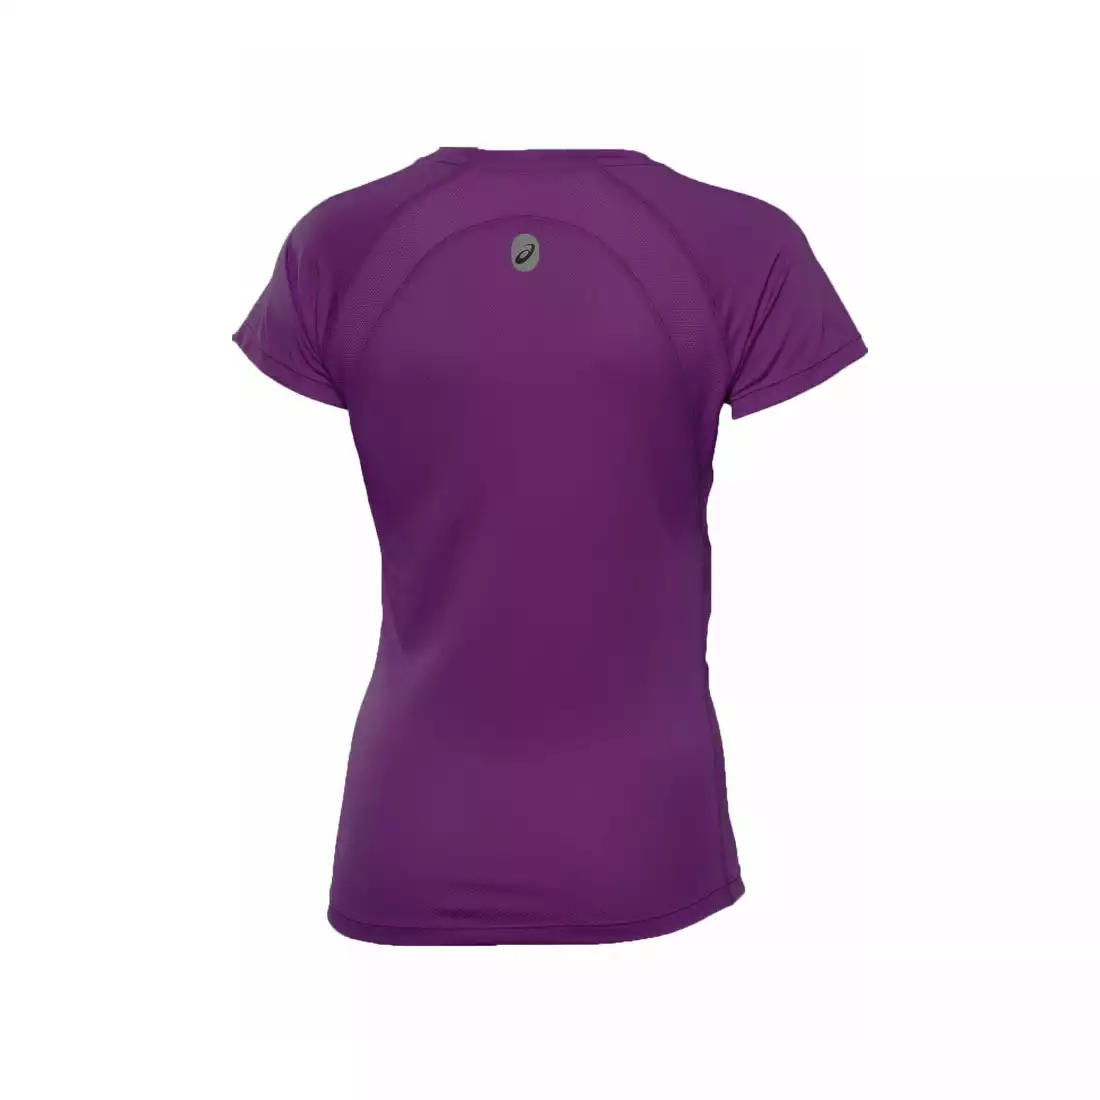 ASICS RUN - 109729-0276 - damska koszulka do biegania, kolor: Fioletowy